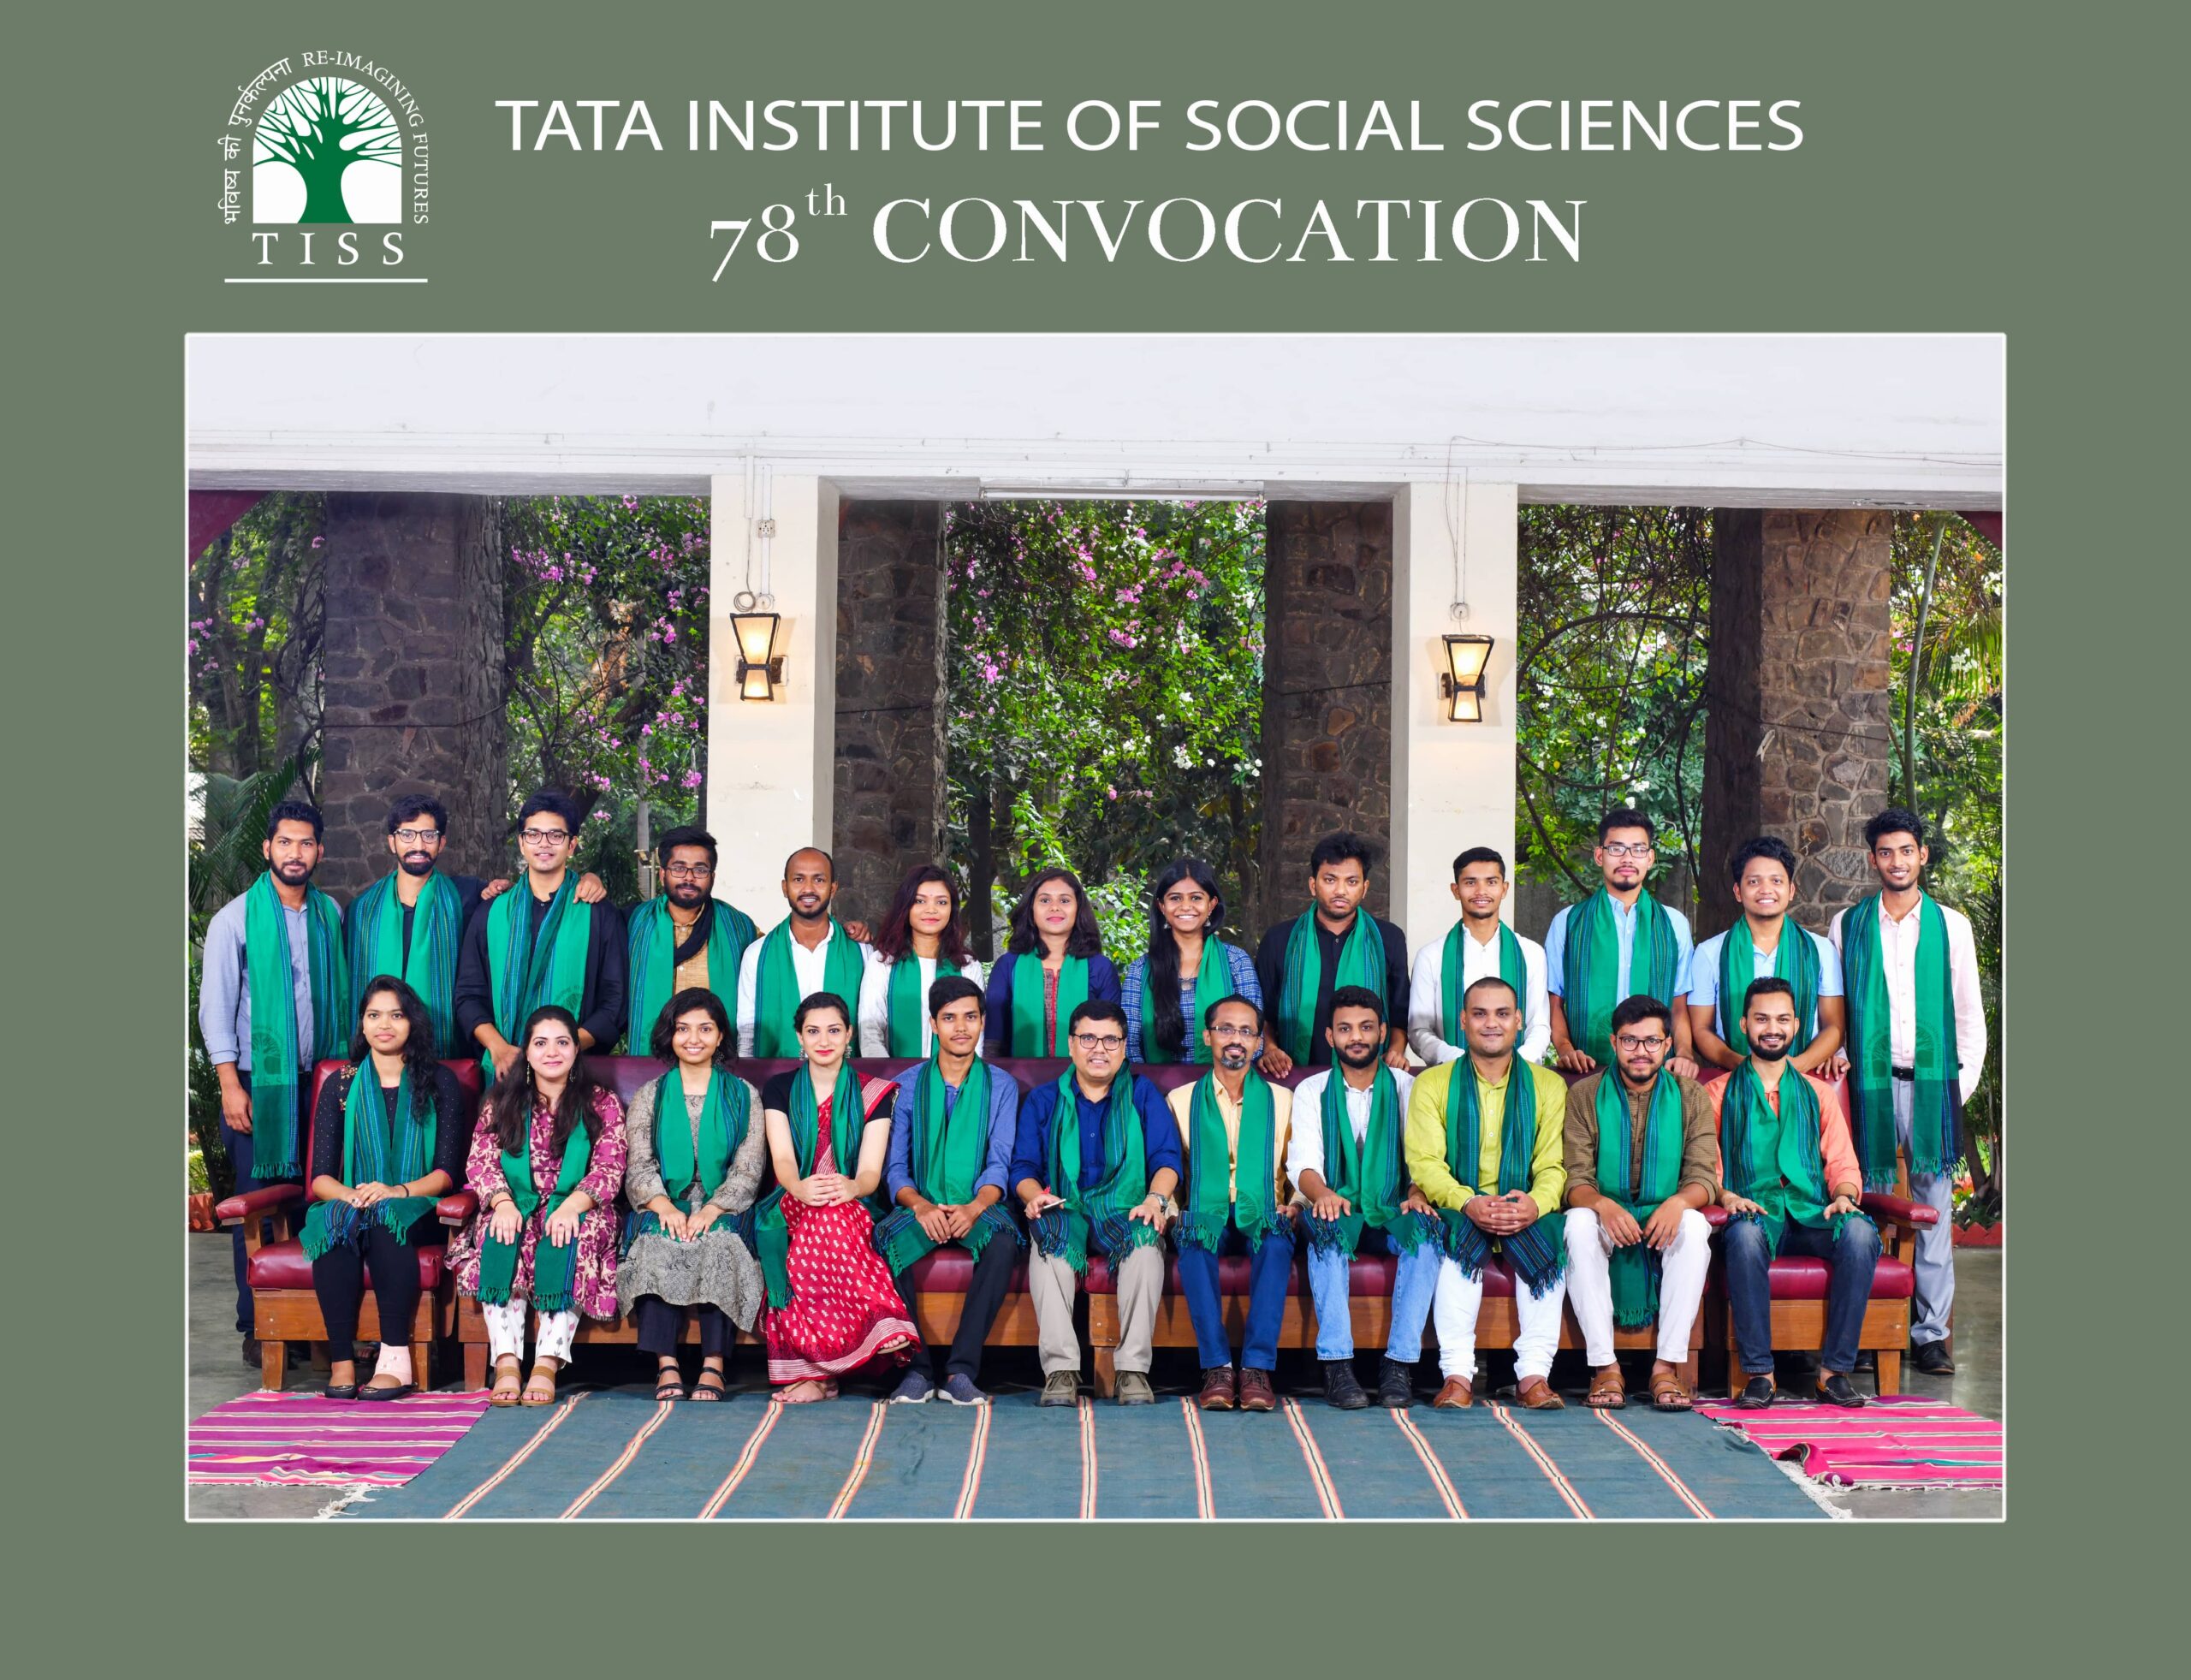 Phaniraj Sarakam got Tata Institute of Social Sciences degree